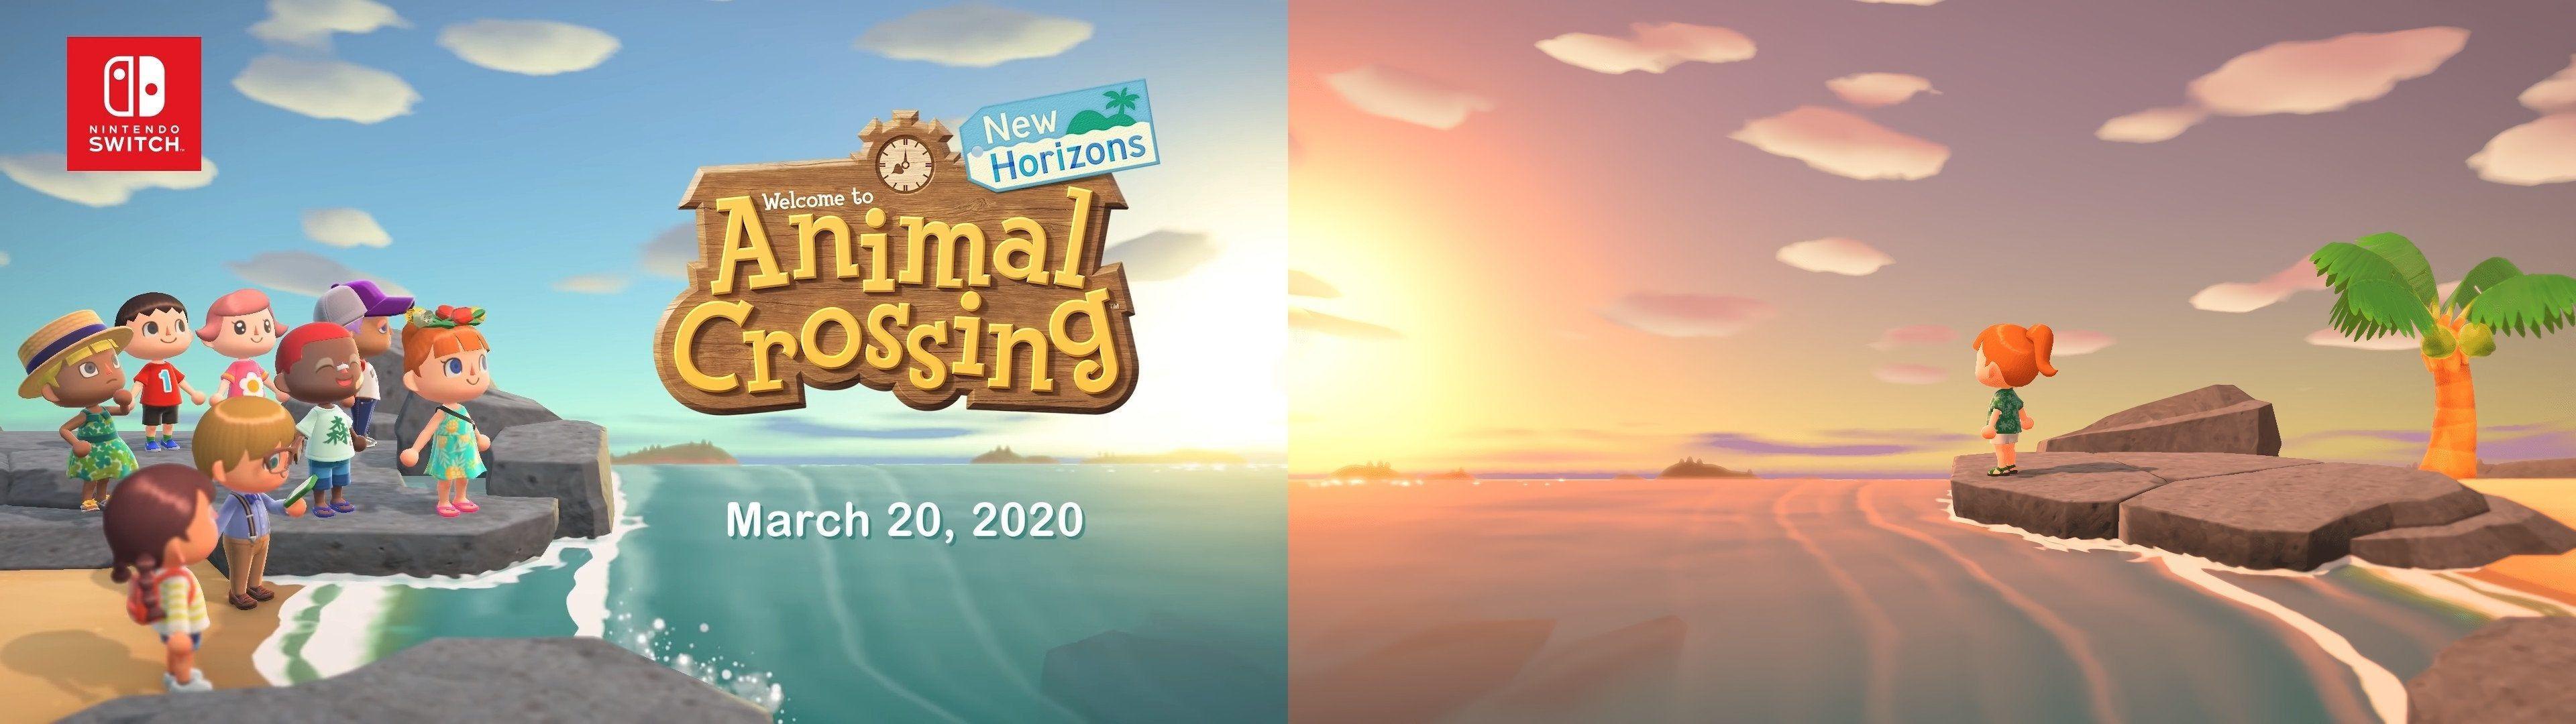 Animal Crossing New Horizons Wallpapers - Top Free Animal ...